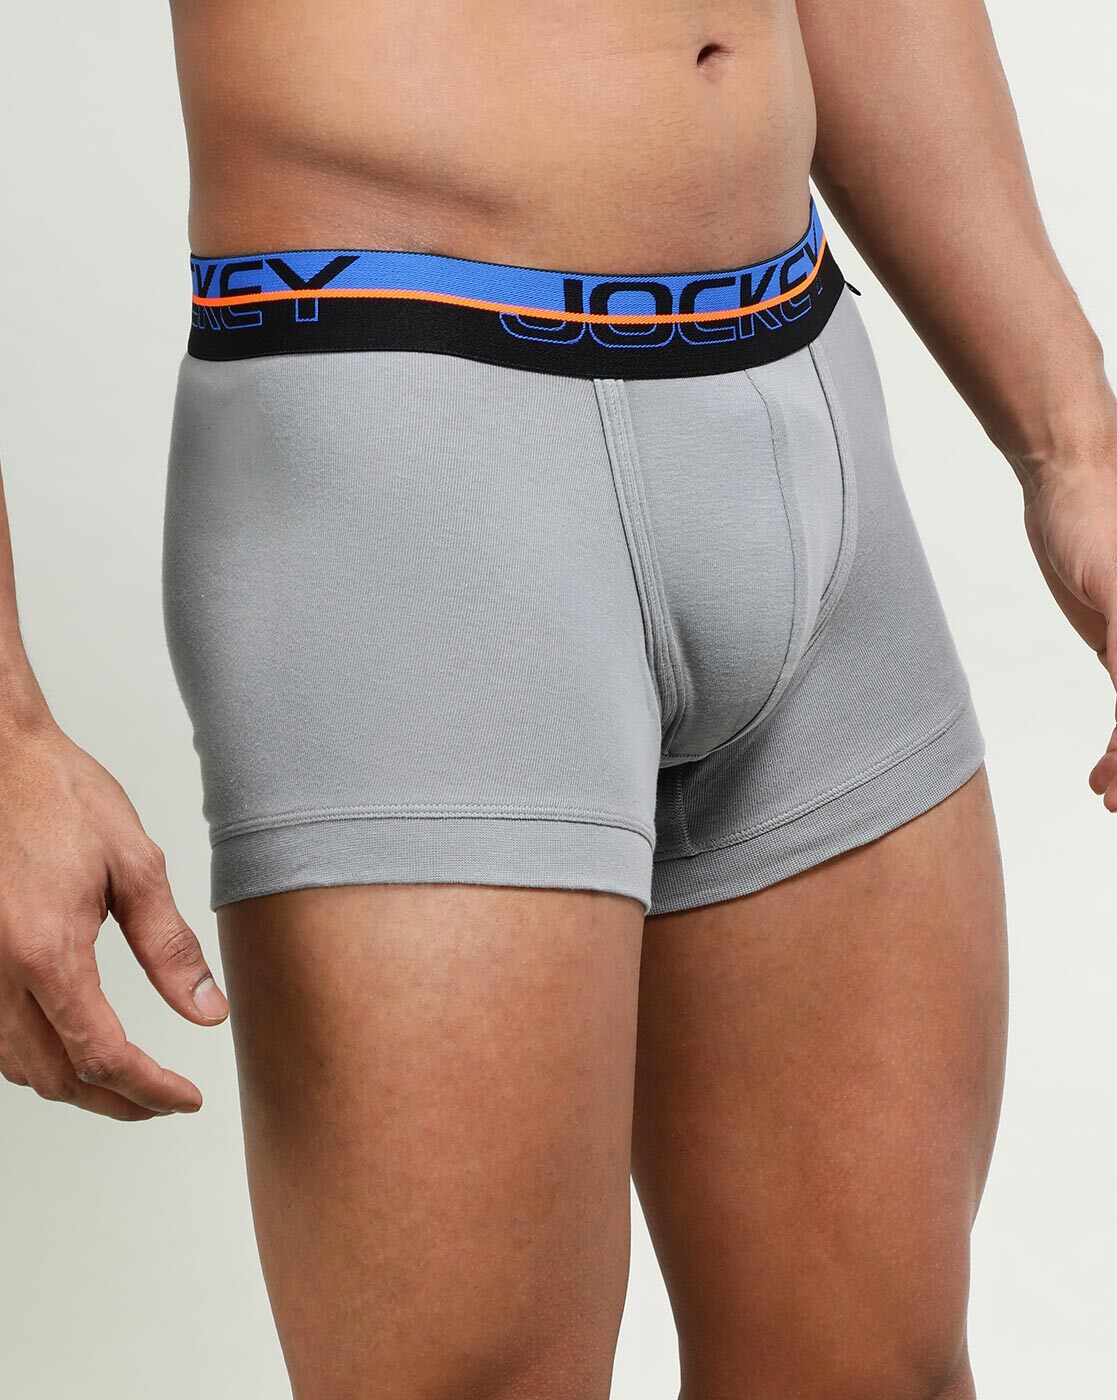 MoFiz 3-Pack Men Boxer Briefs Underwear Short Trunks Breathable